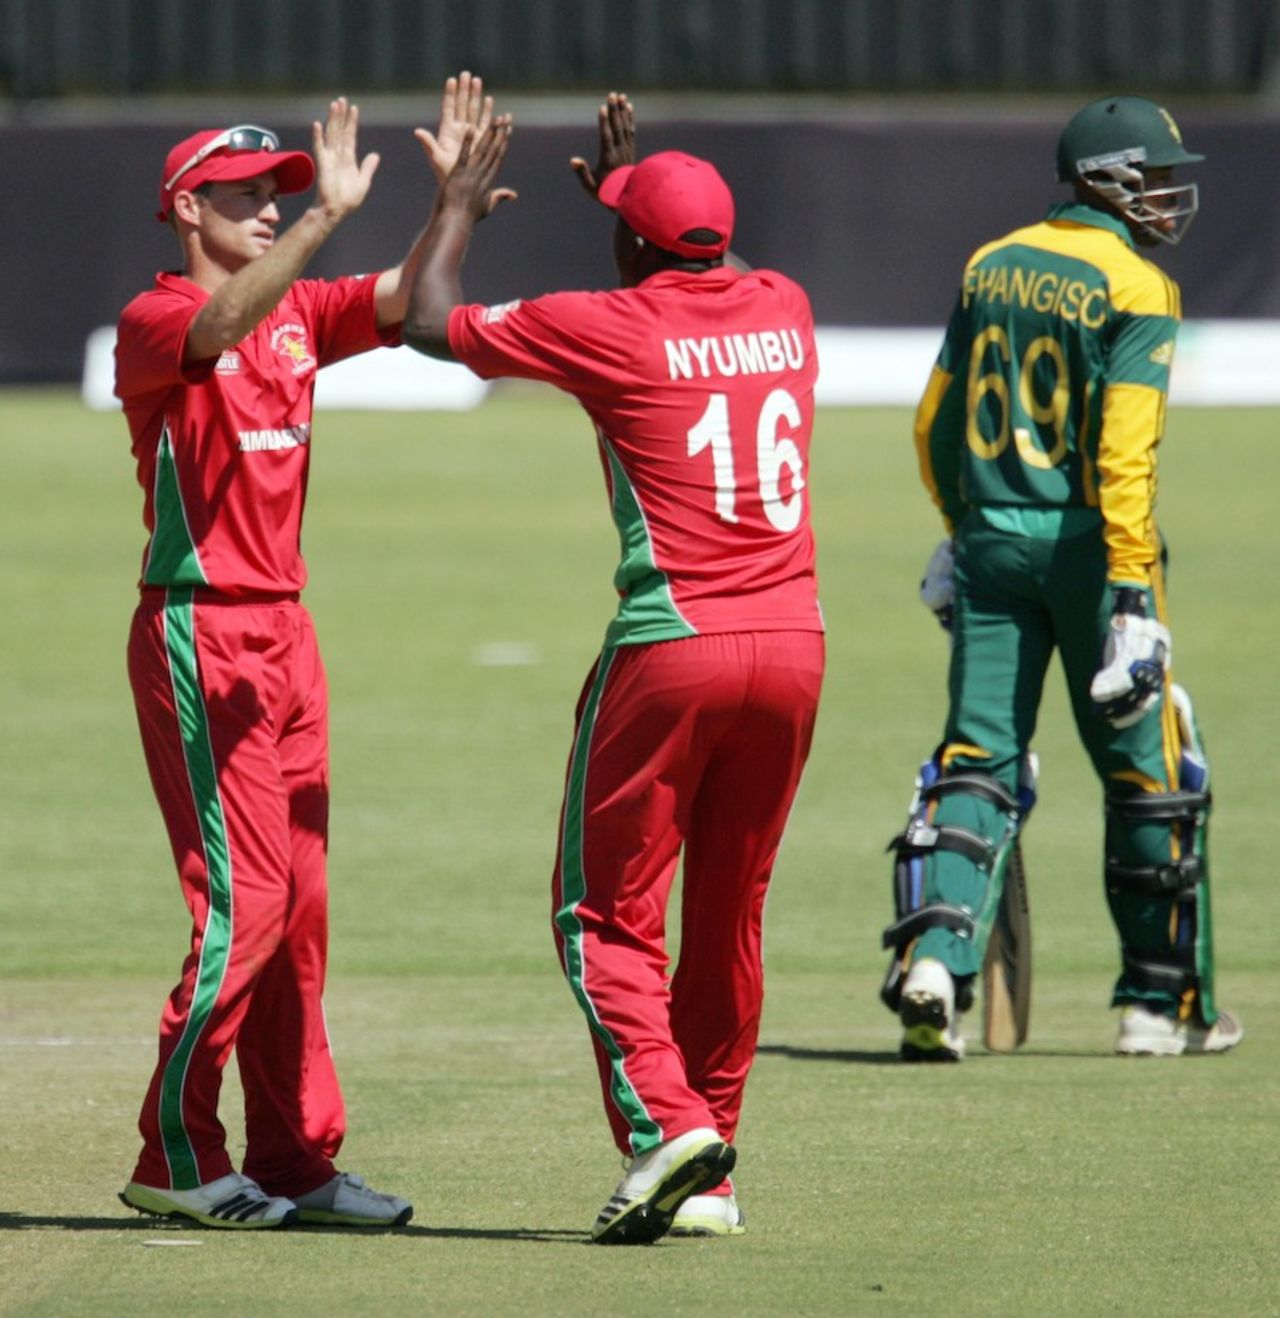 Sean Williams and John Nyumbu celebrate the dismissal of Aaron Phangiso, Zimbabwe v South Africa, 2nd ODI, Bulawayo, August 19, 2014